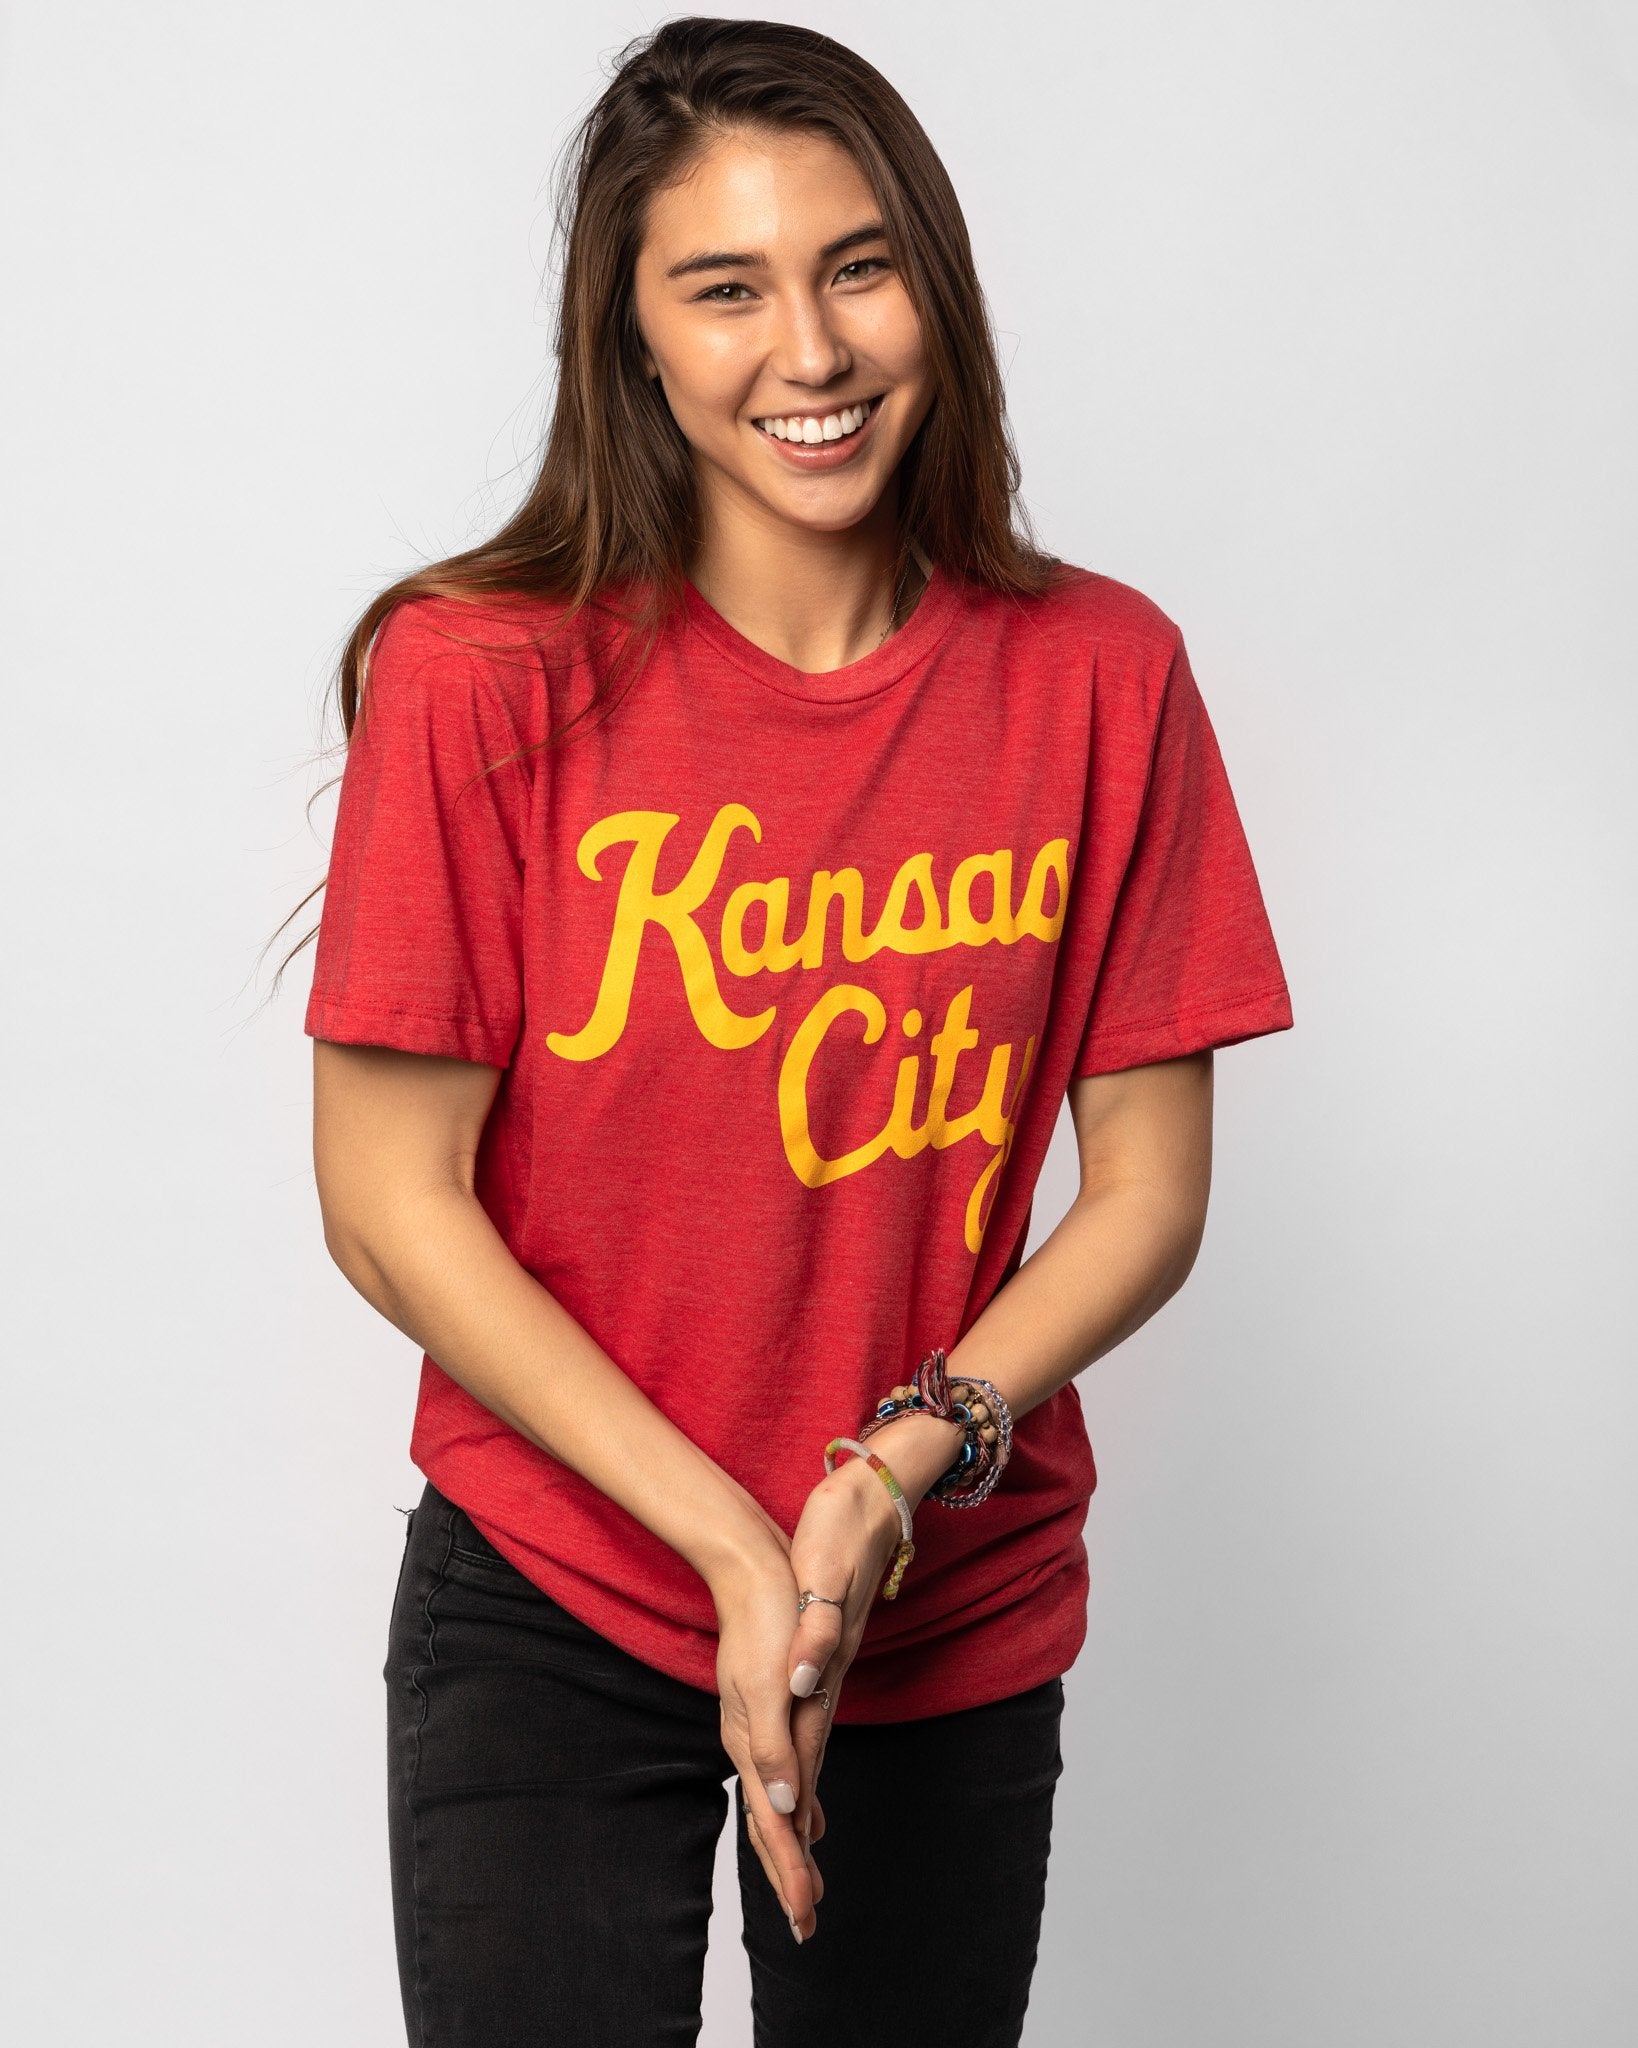 kansas city women's shirts